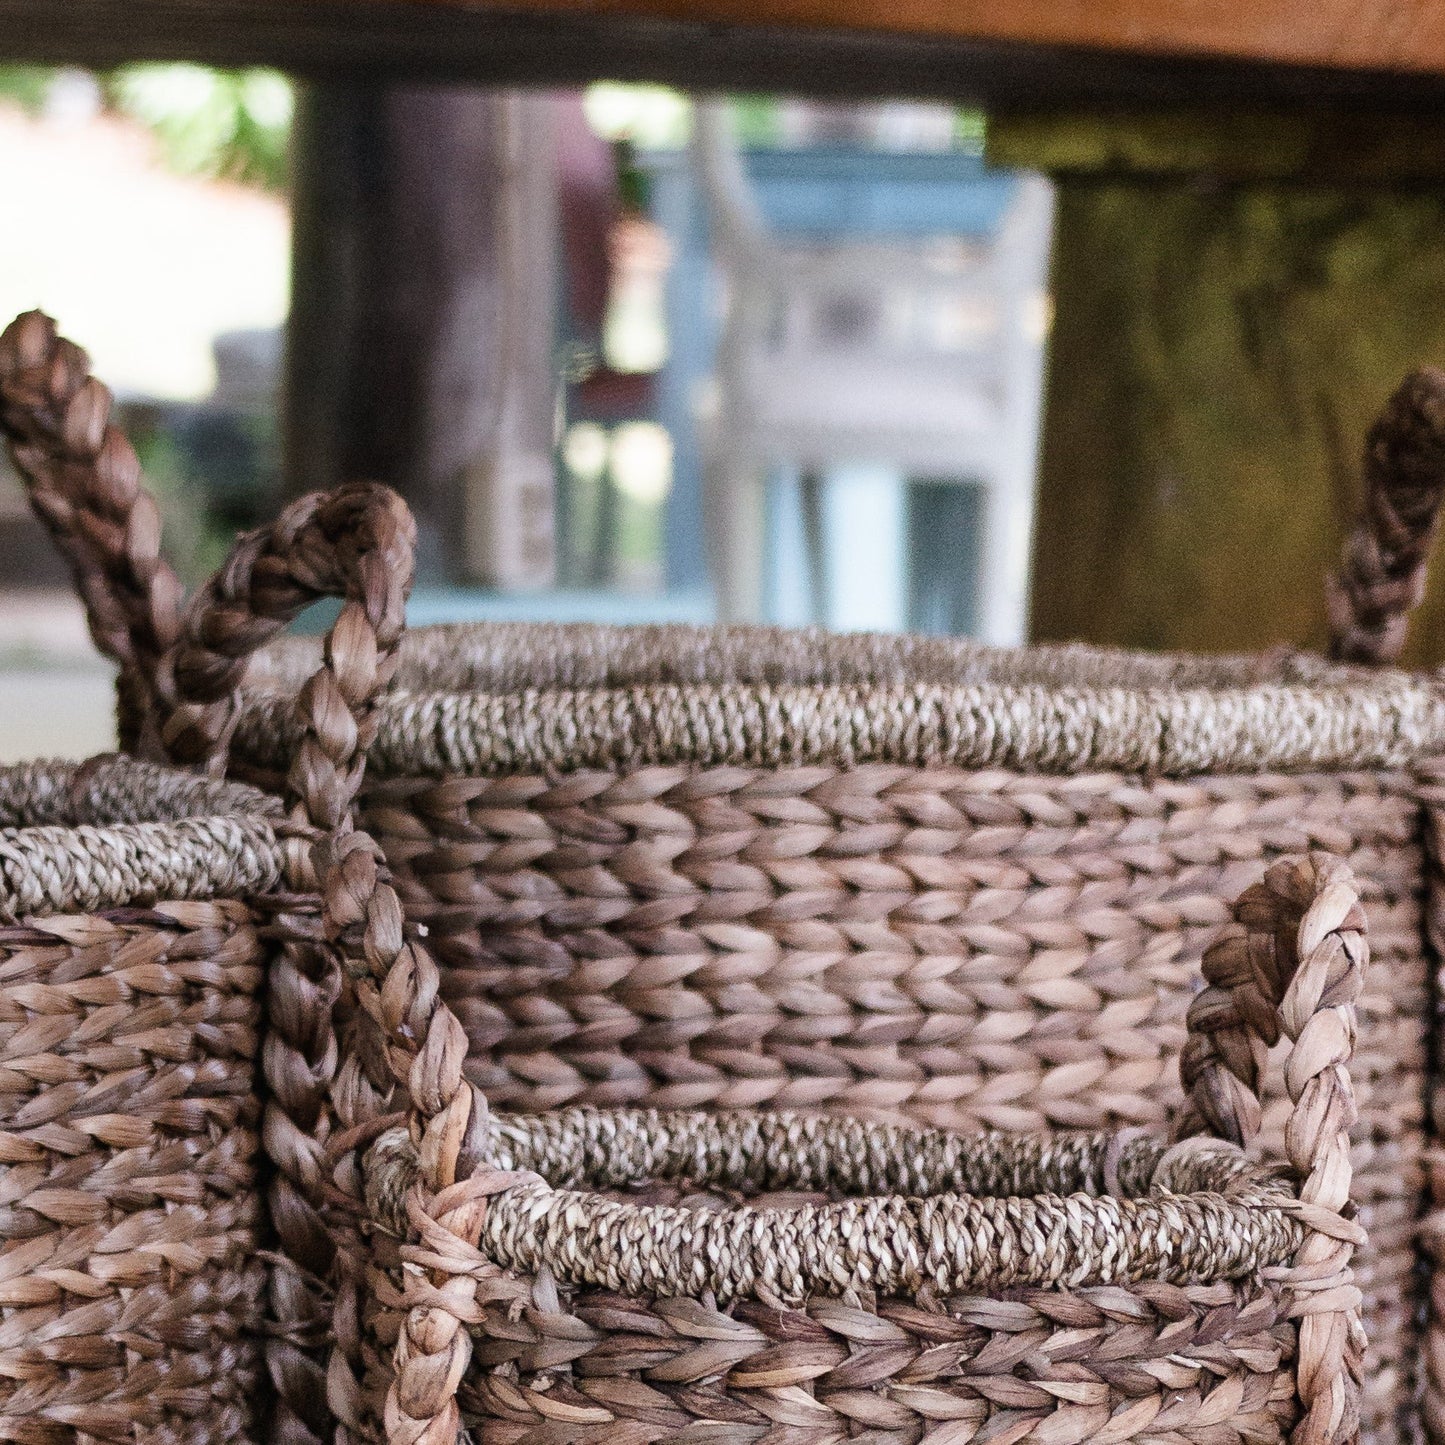 Plant | Basket Storage Basket | Laundry basket CANGGU made of water hyacinth (3 sizes)